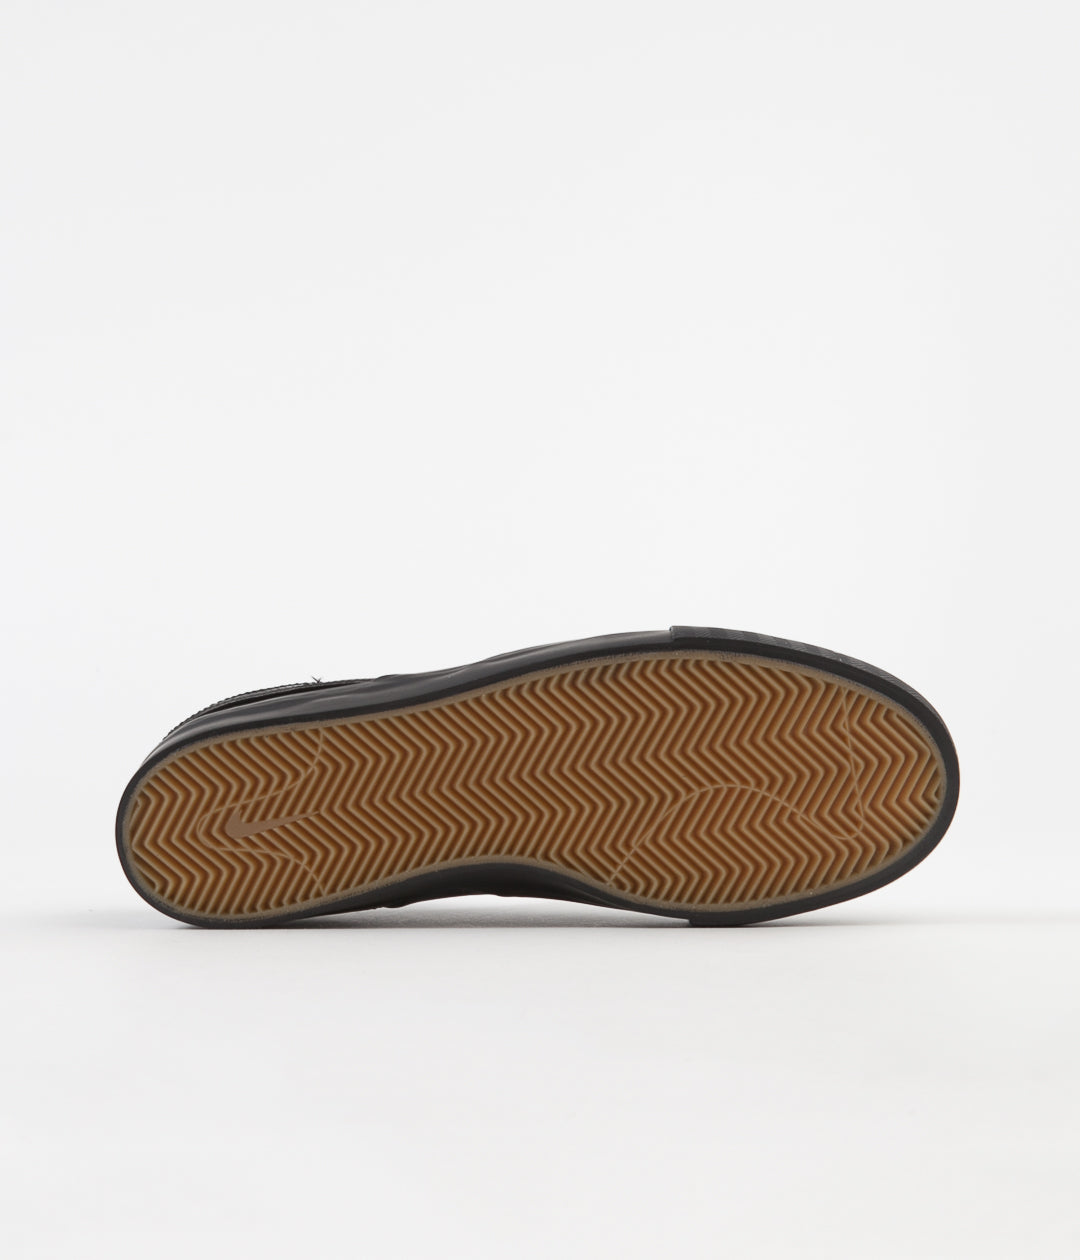 Nike SB Orange Label Janoski Slip On Remastered 'L. Baker' Shoes - Bla ...